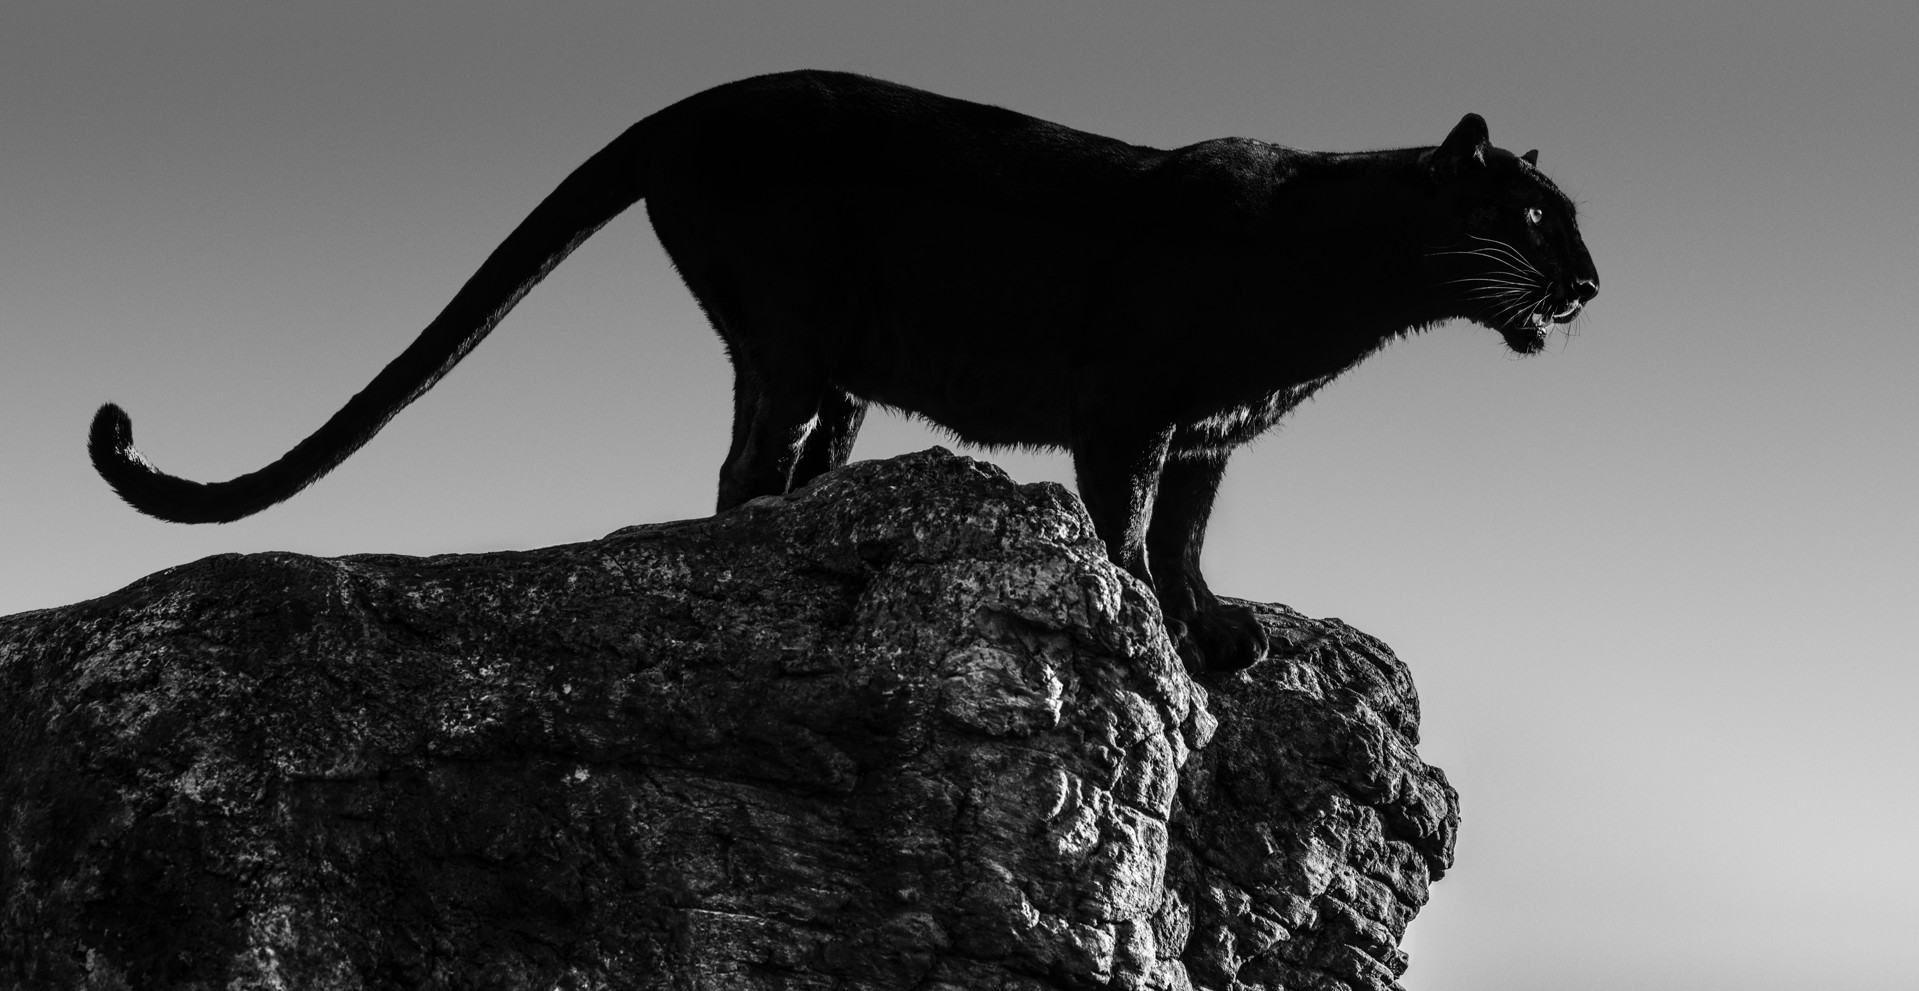 Black Cat by David Yarrow